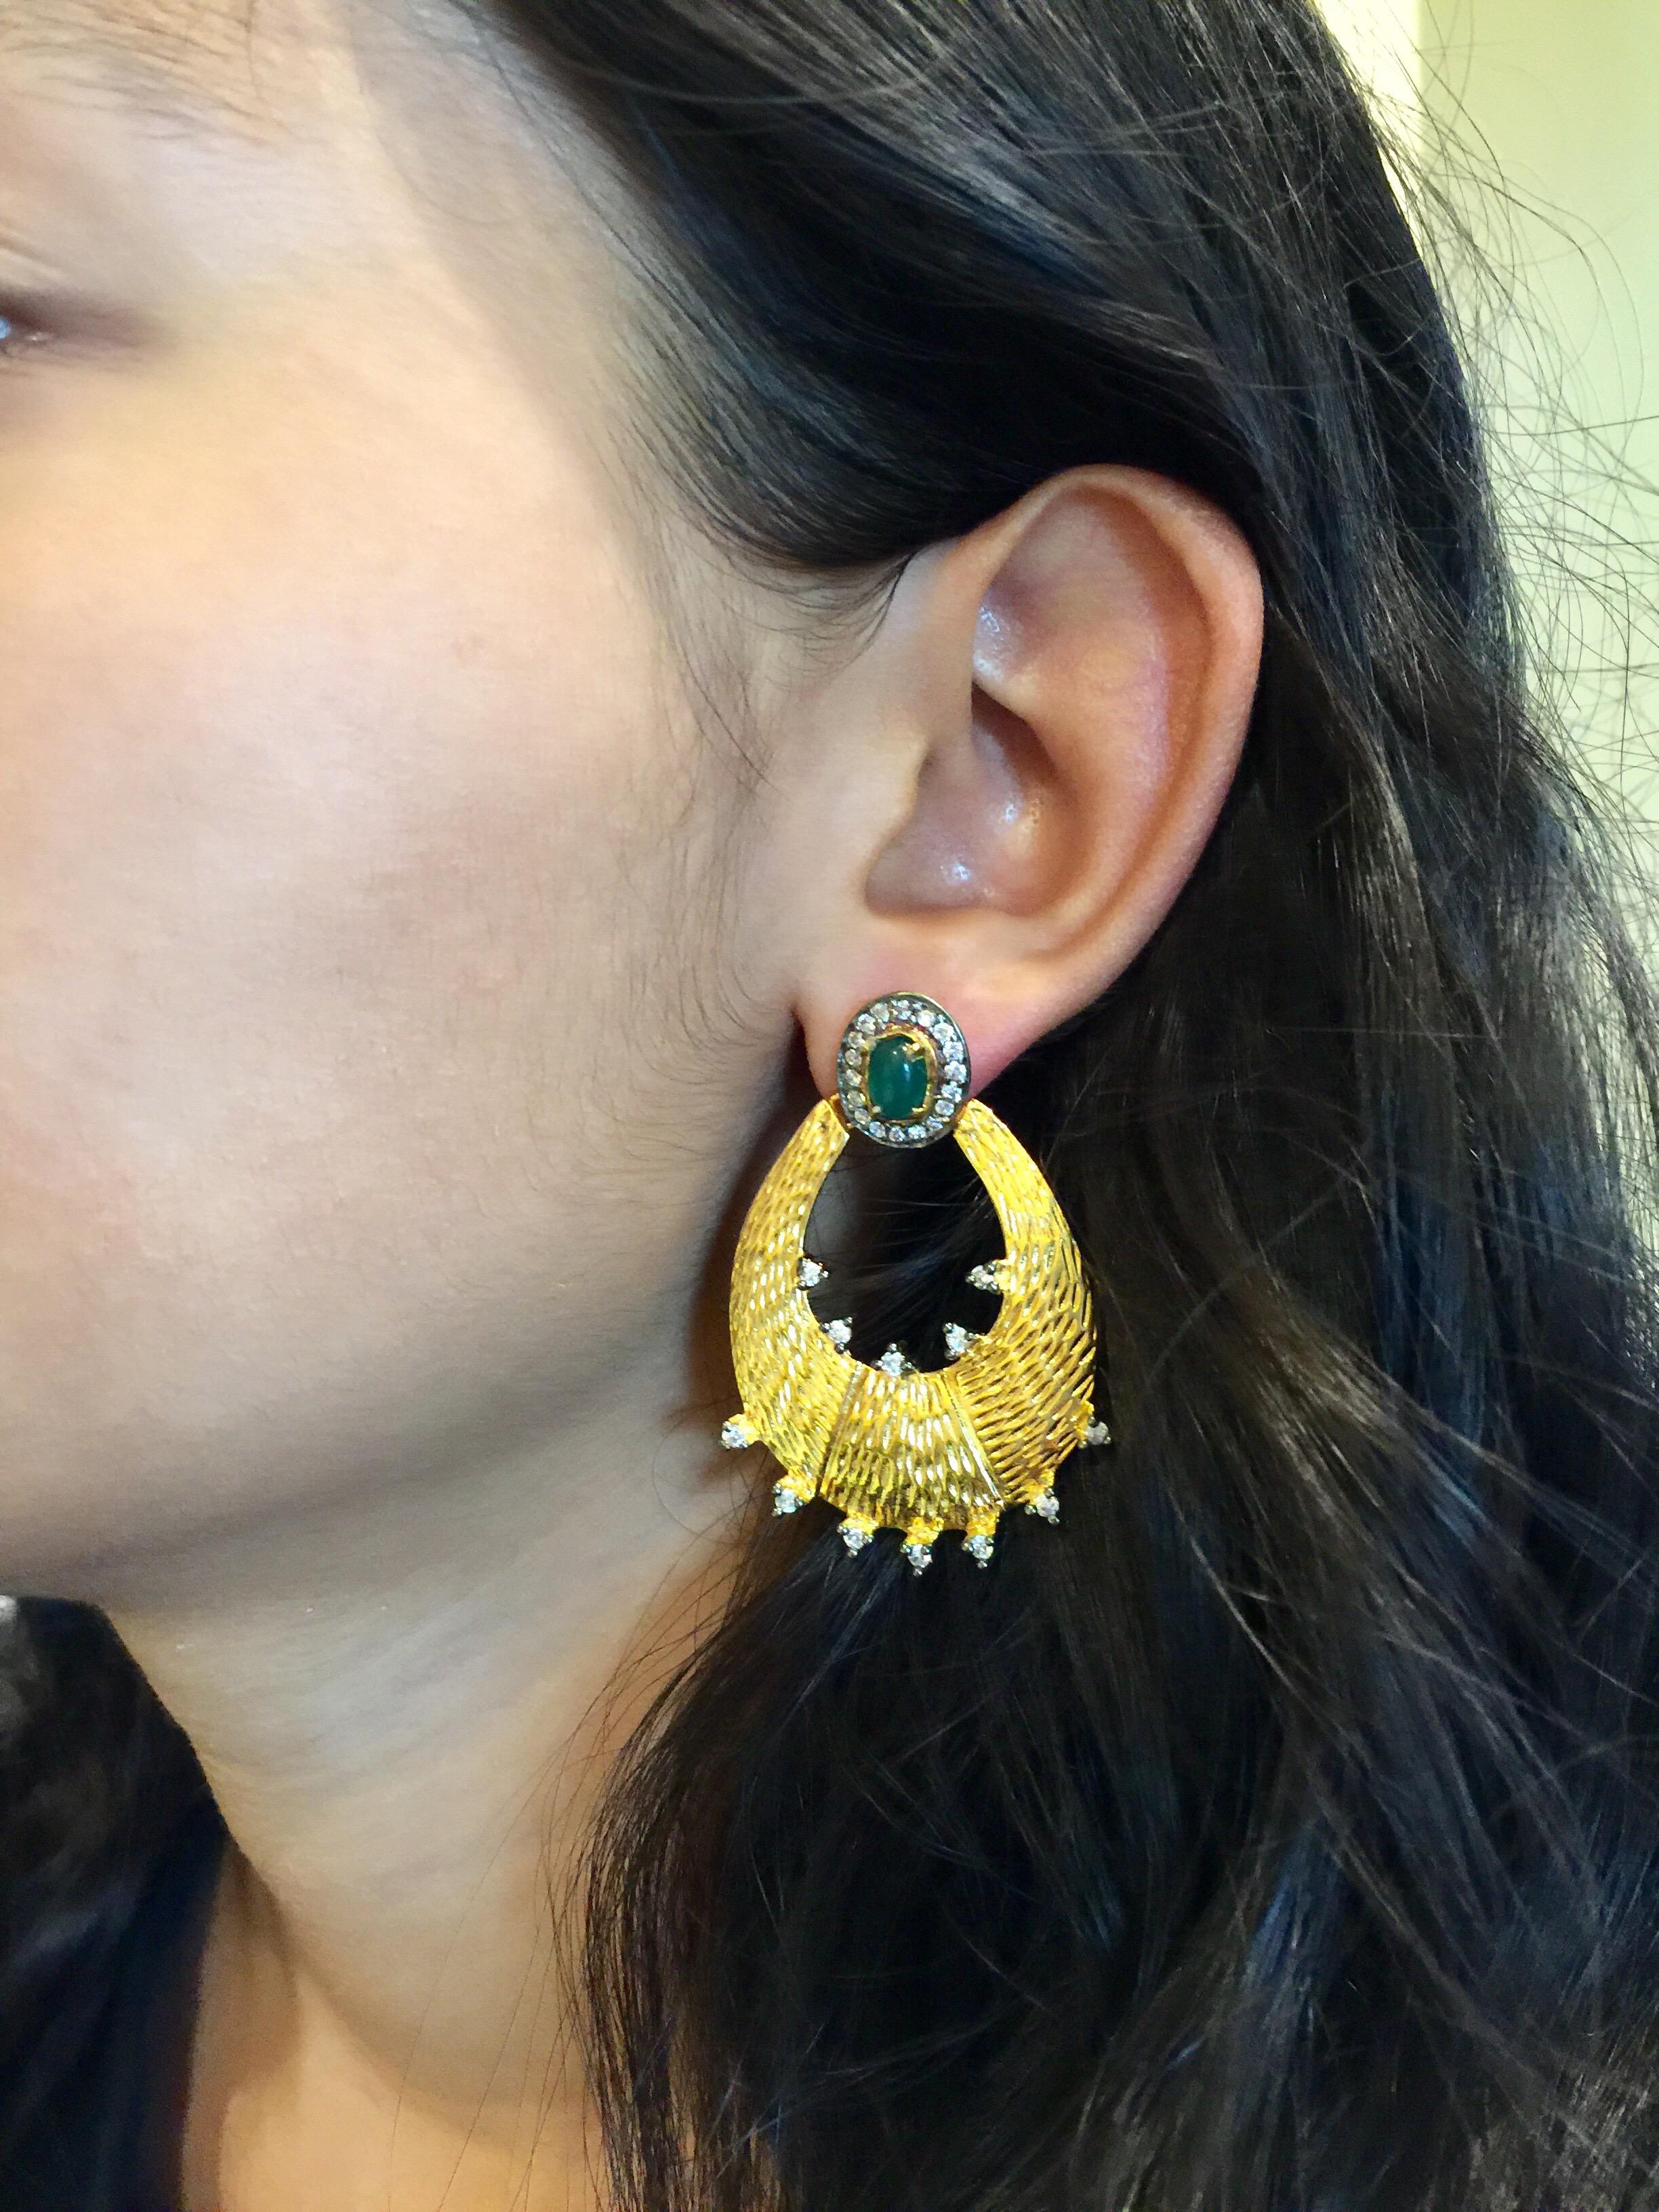 Artisan Meghna Jewels Saya Earrings as seen in “Gossip Girl”! Worn by Kelly Rutherford